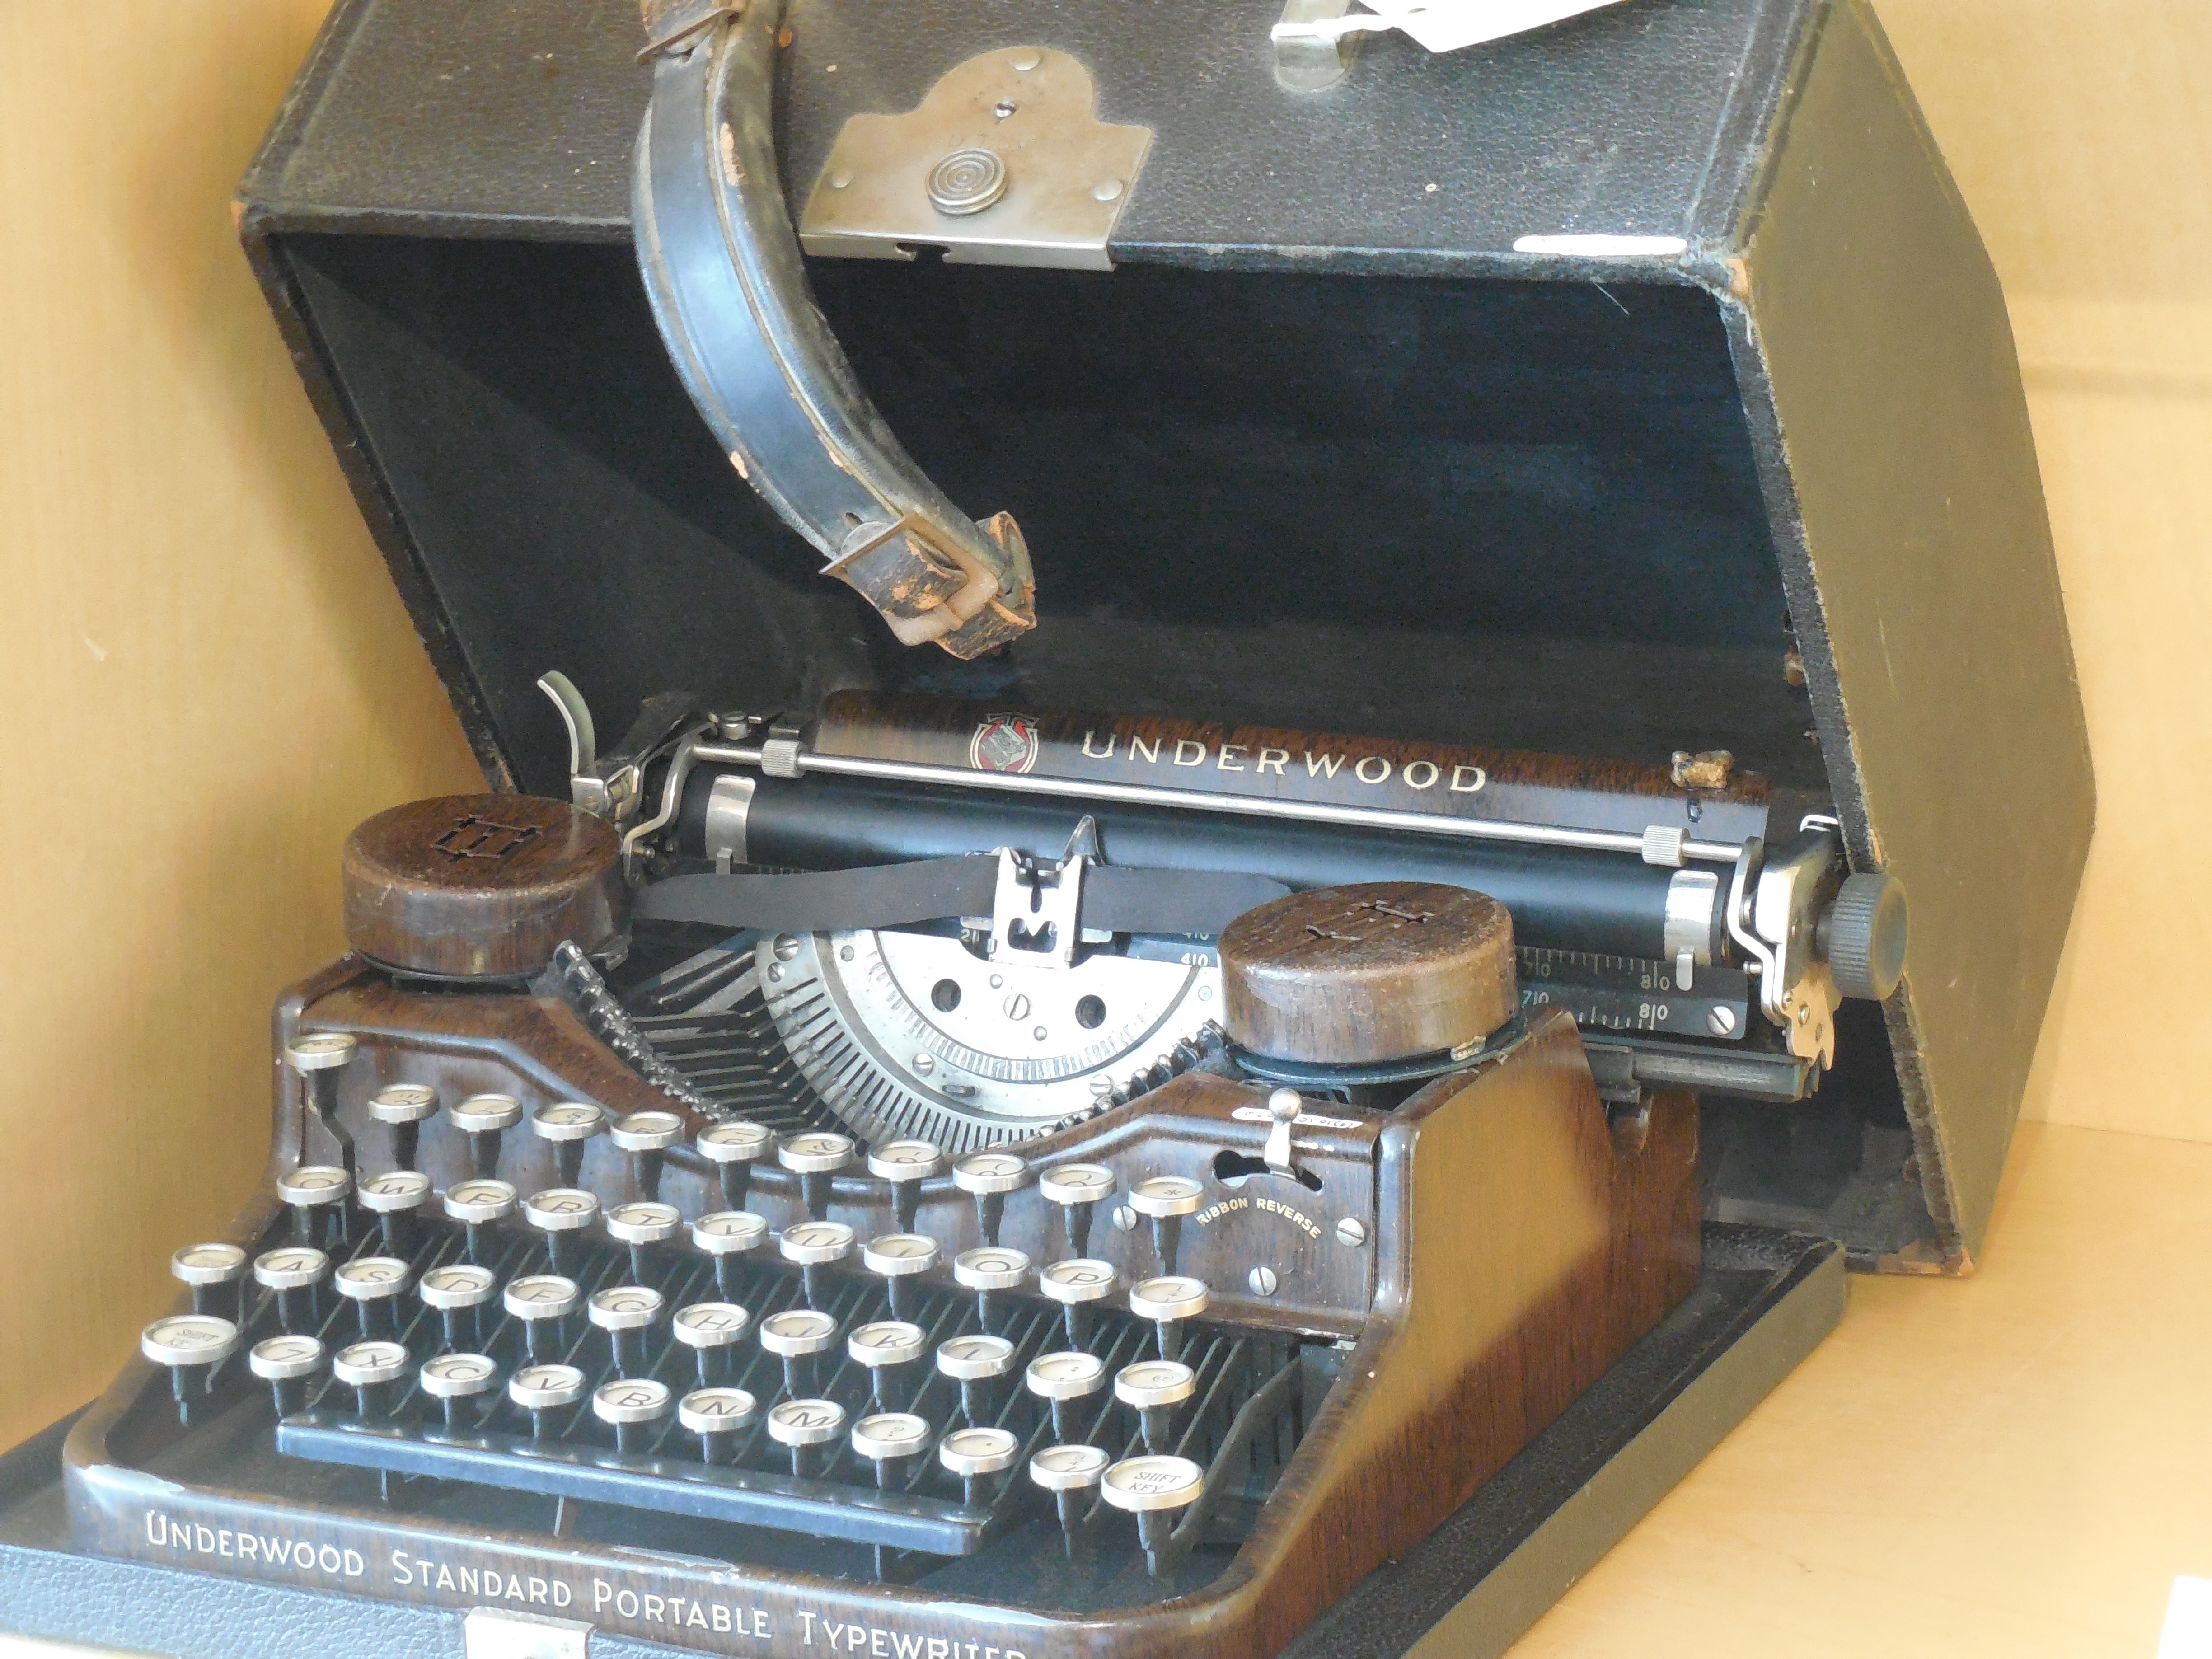 Vintage, Vintage Typewriter, Typewriter, old-fashioned, retro styled